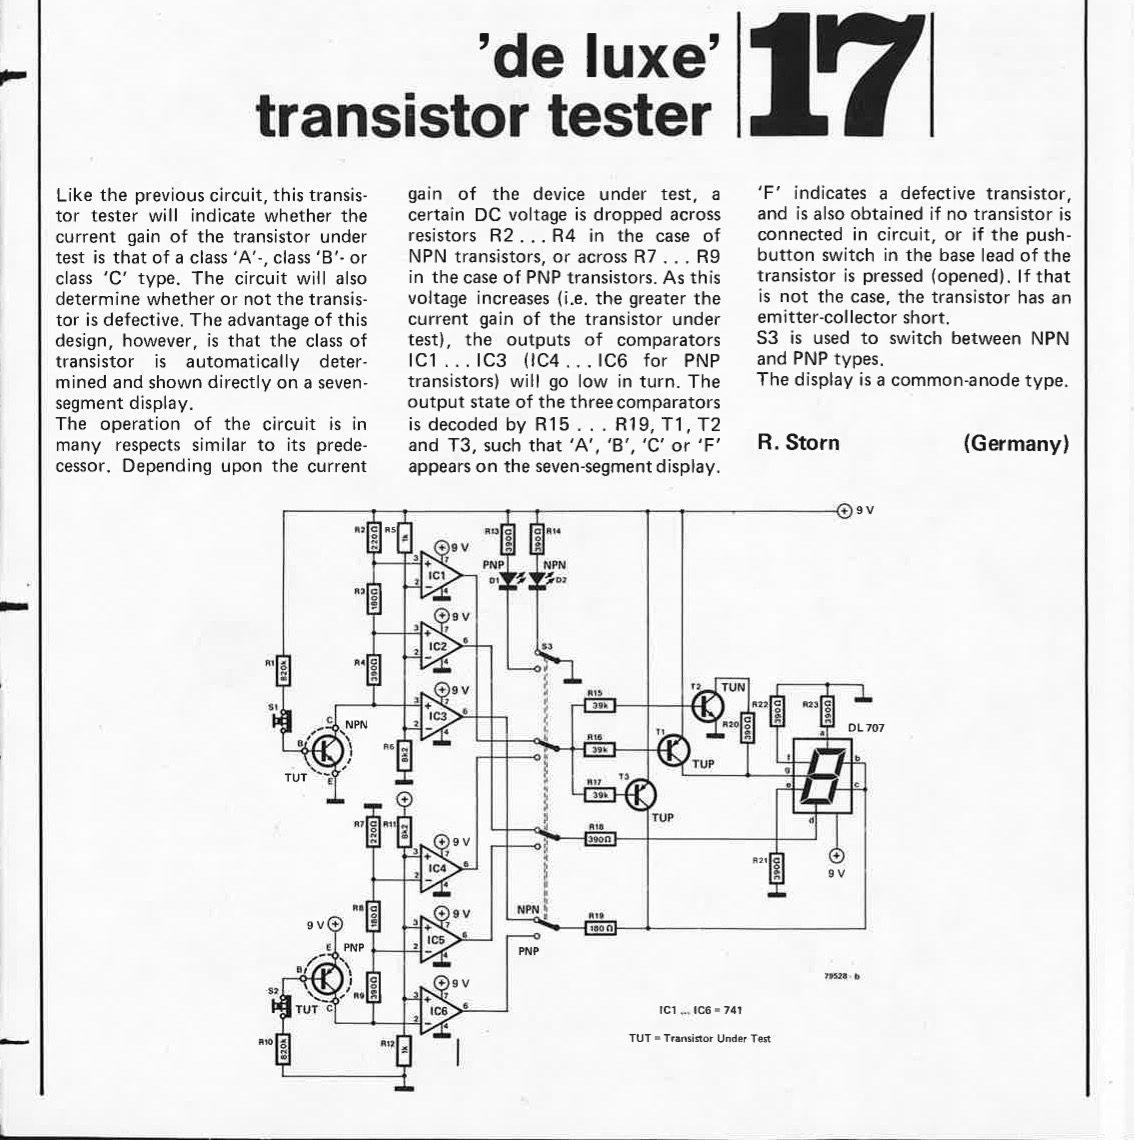 de luxe` transistor tester